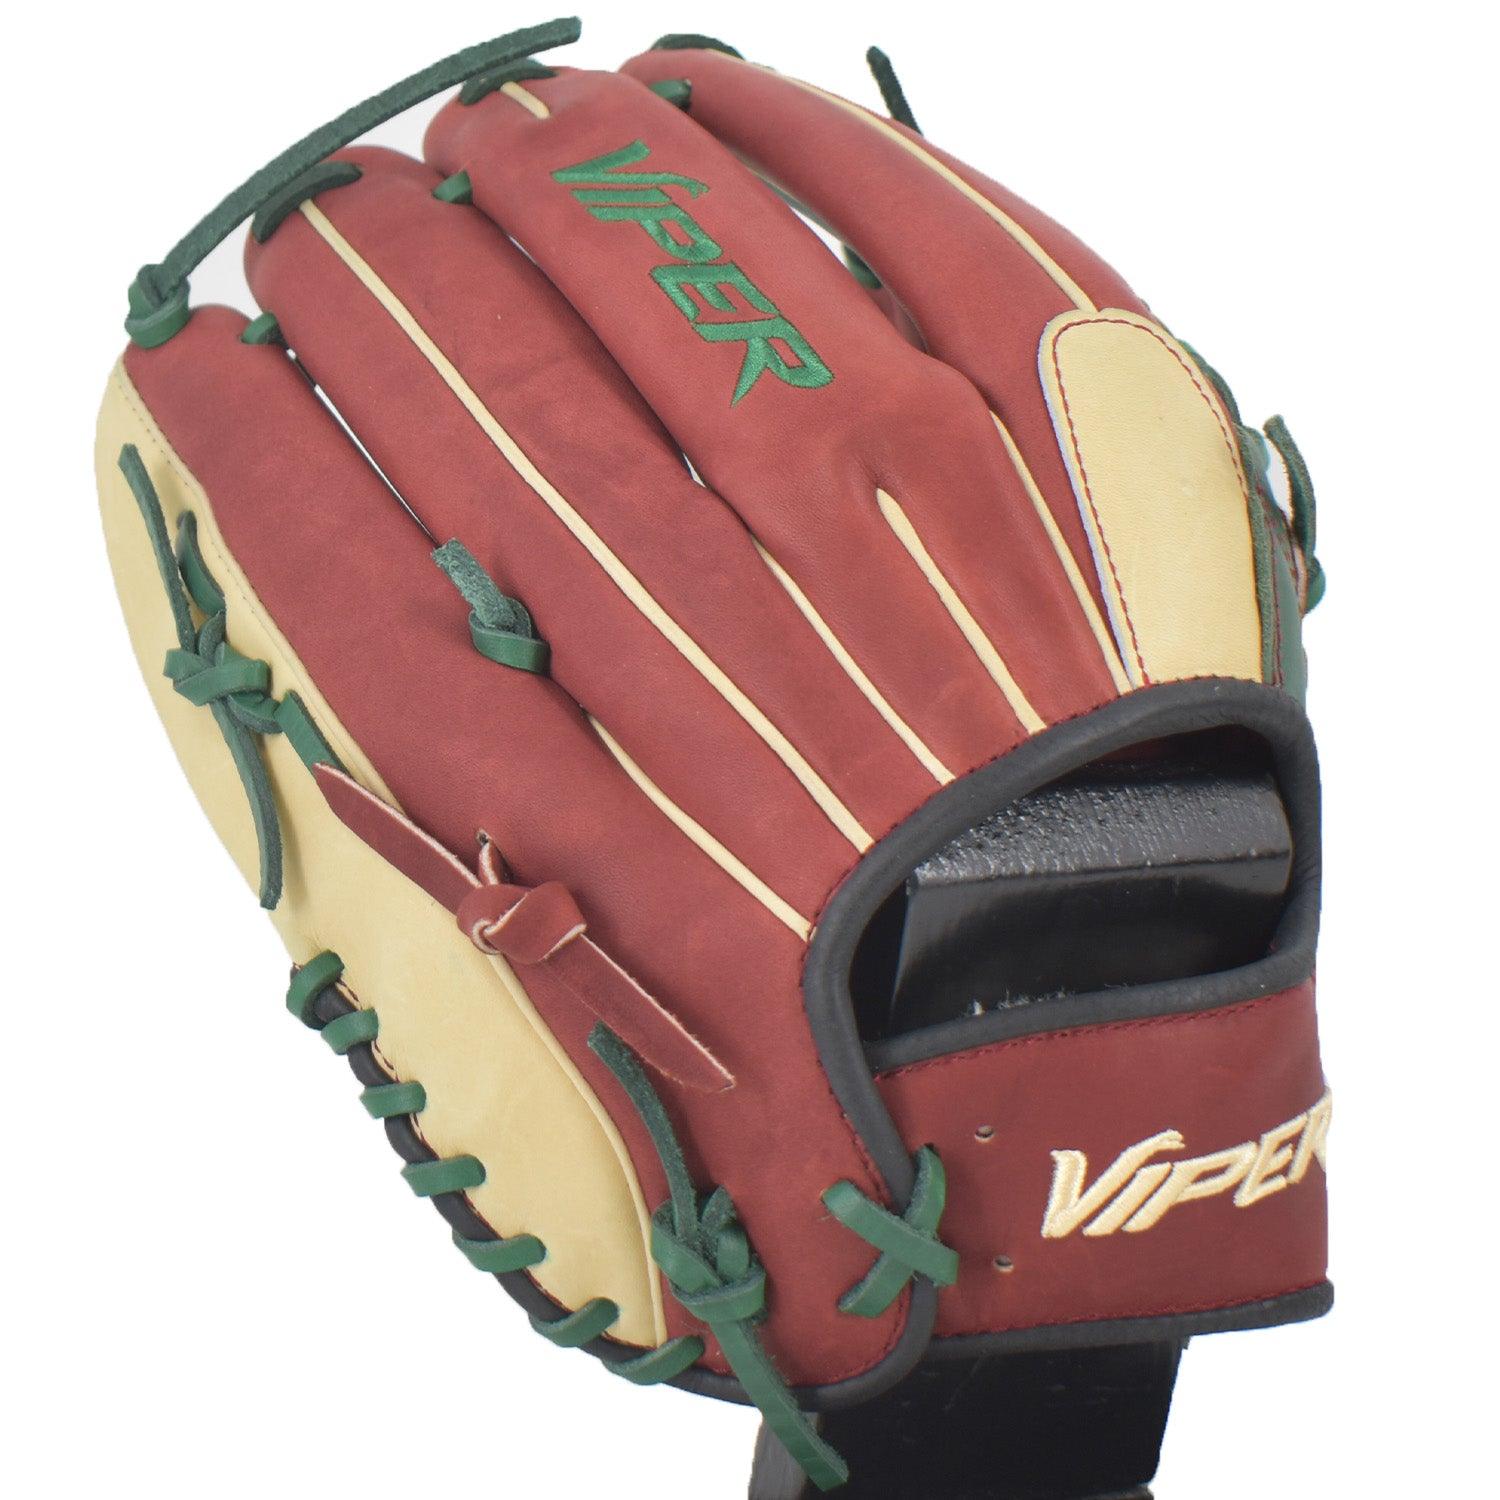 Viper Japanese Kip Leather Slowpitch Softball Fielding Glove Carmel Green Tan - Smash It Sports